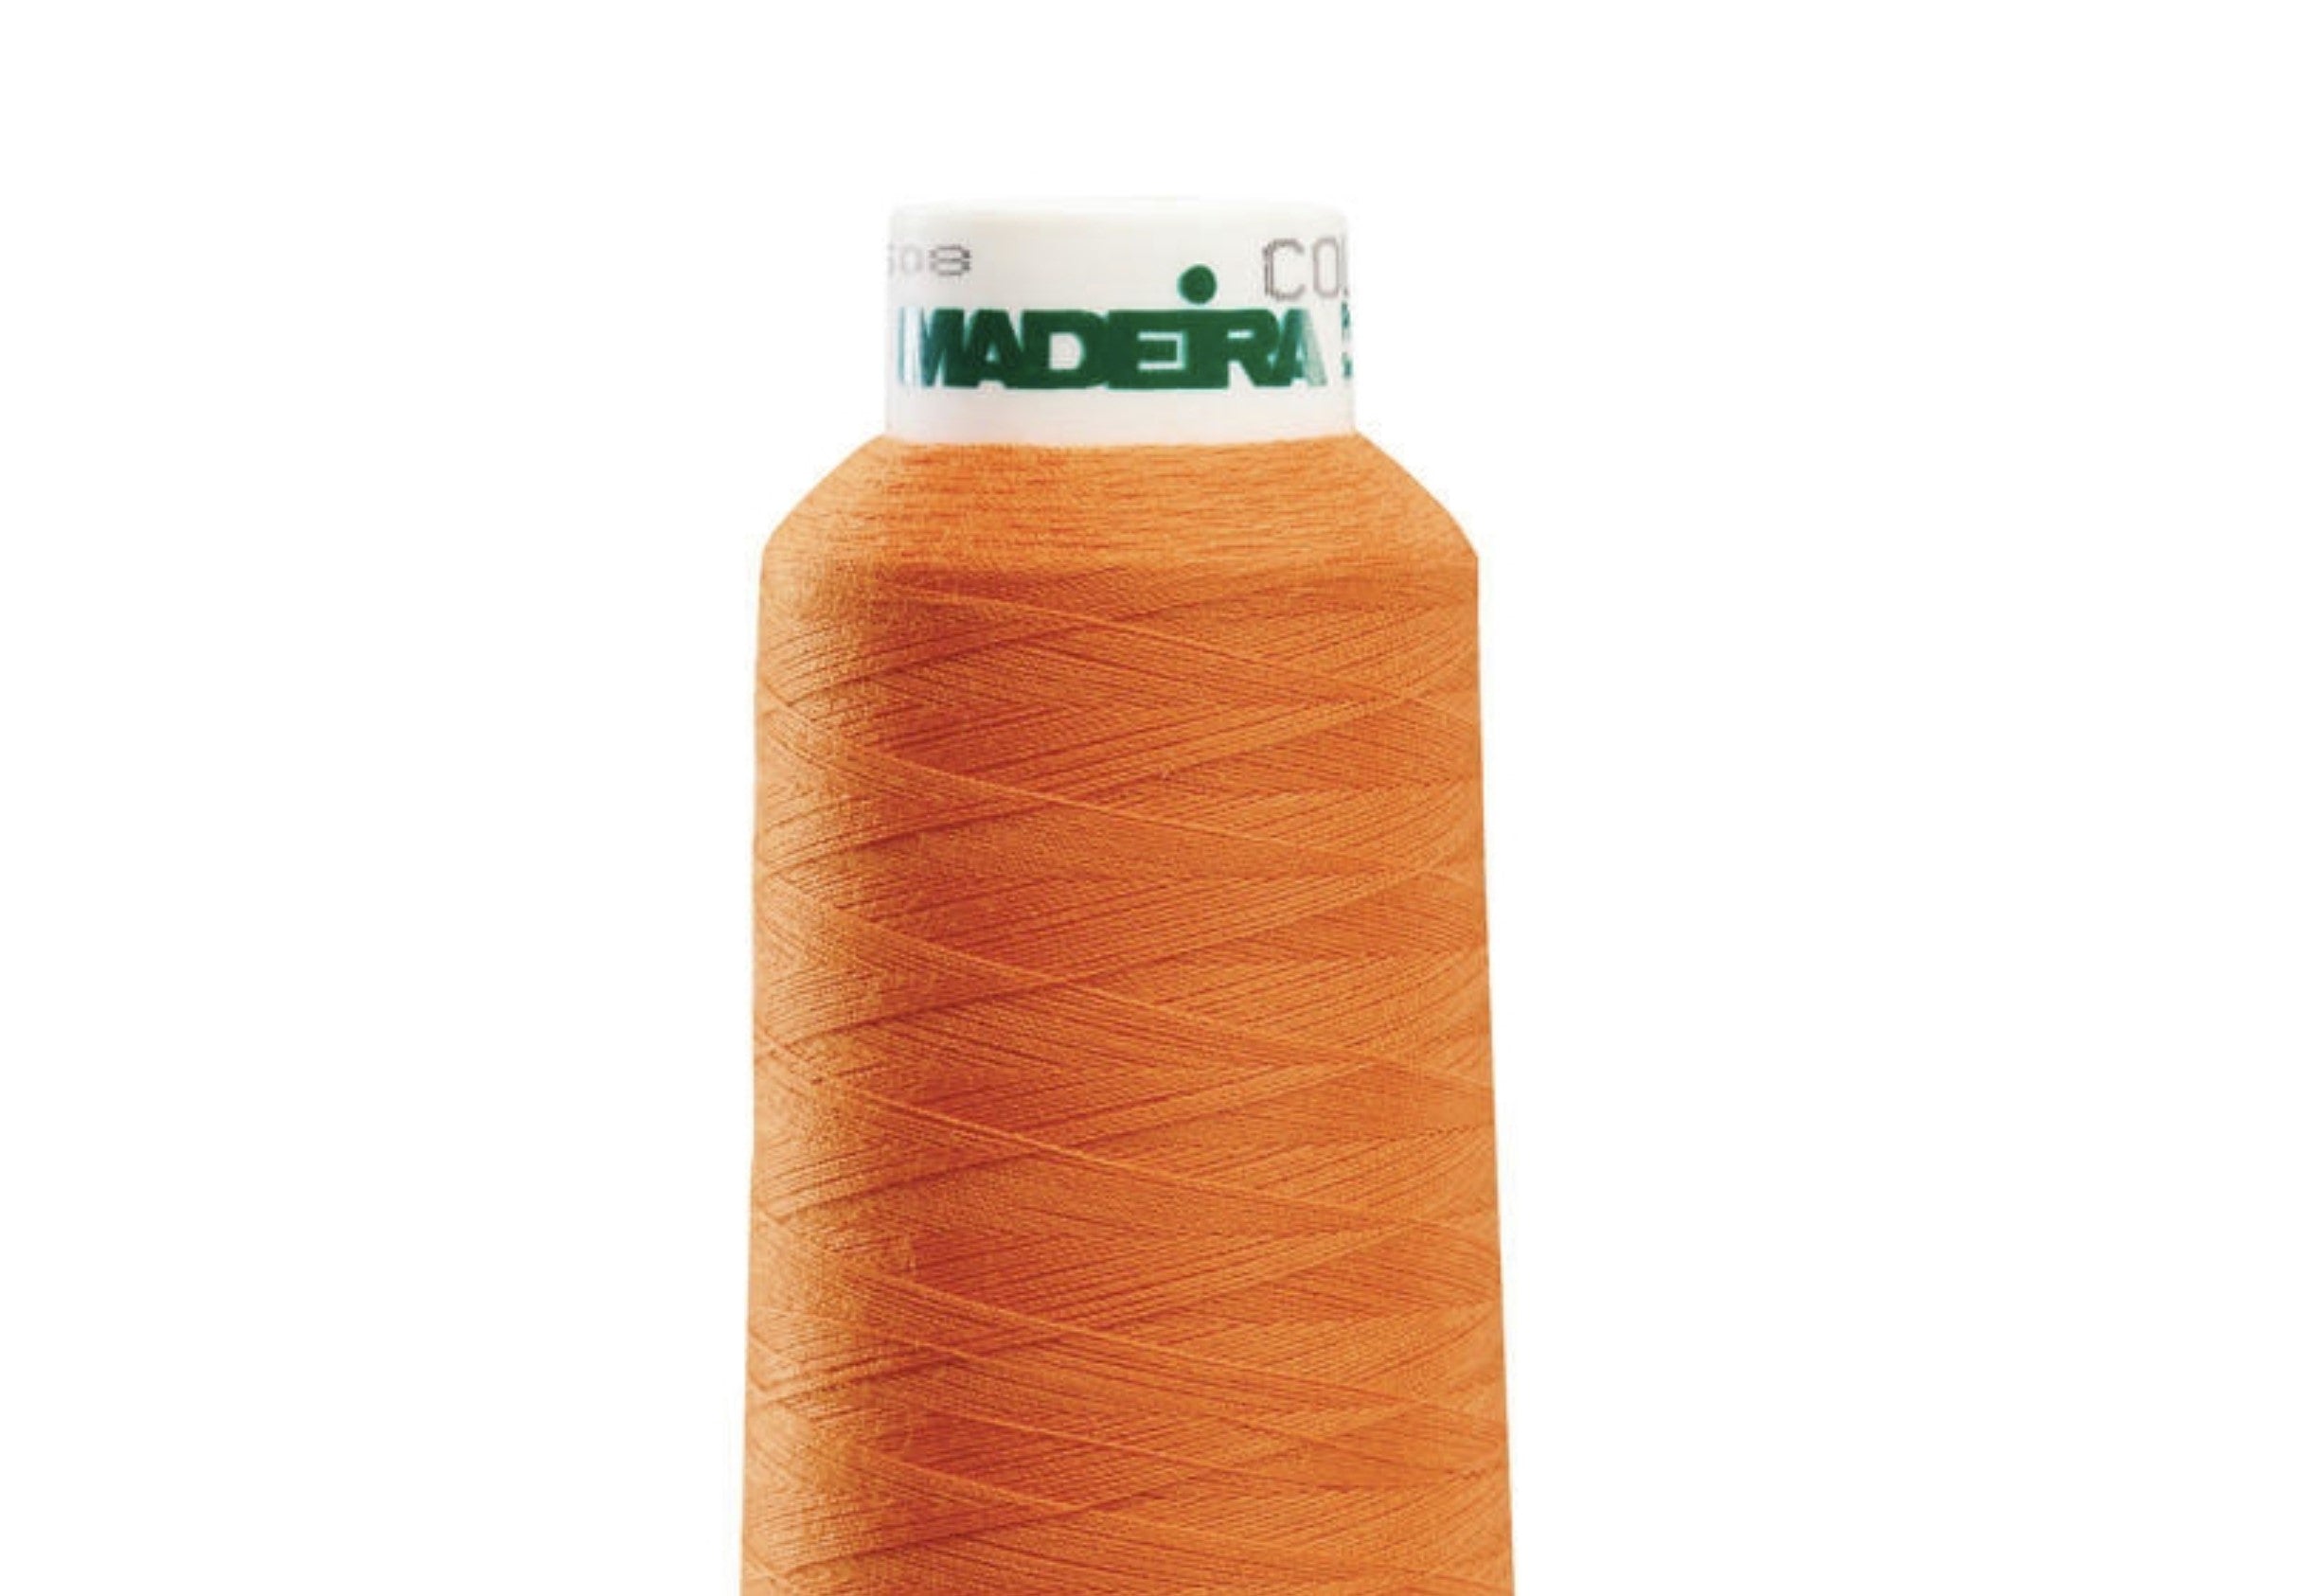 Orange Color, Aerolock Premium Serger Thread, Ref. 8765 by Madeira®